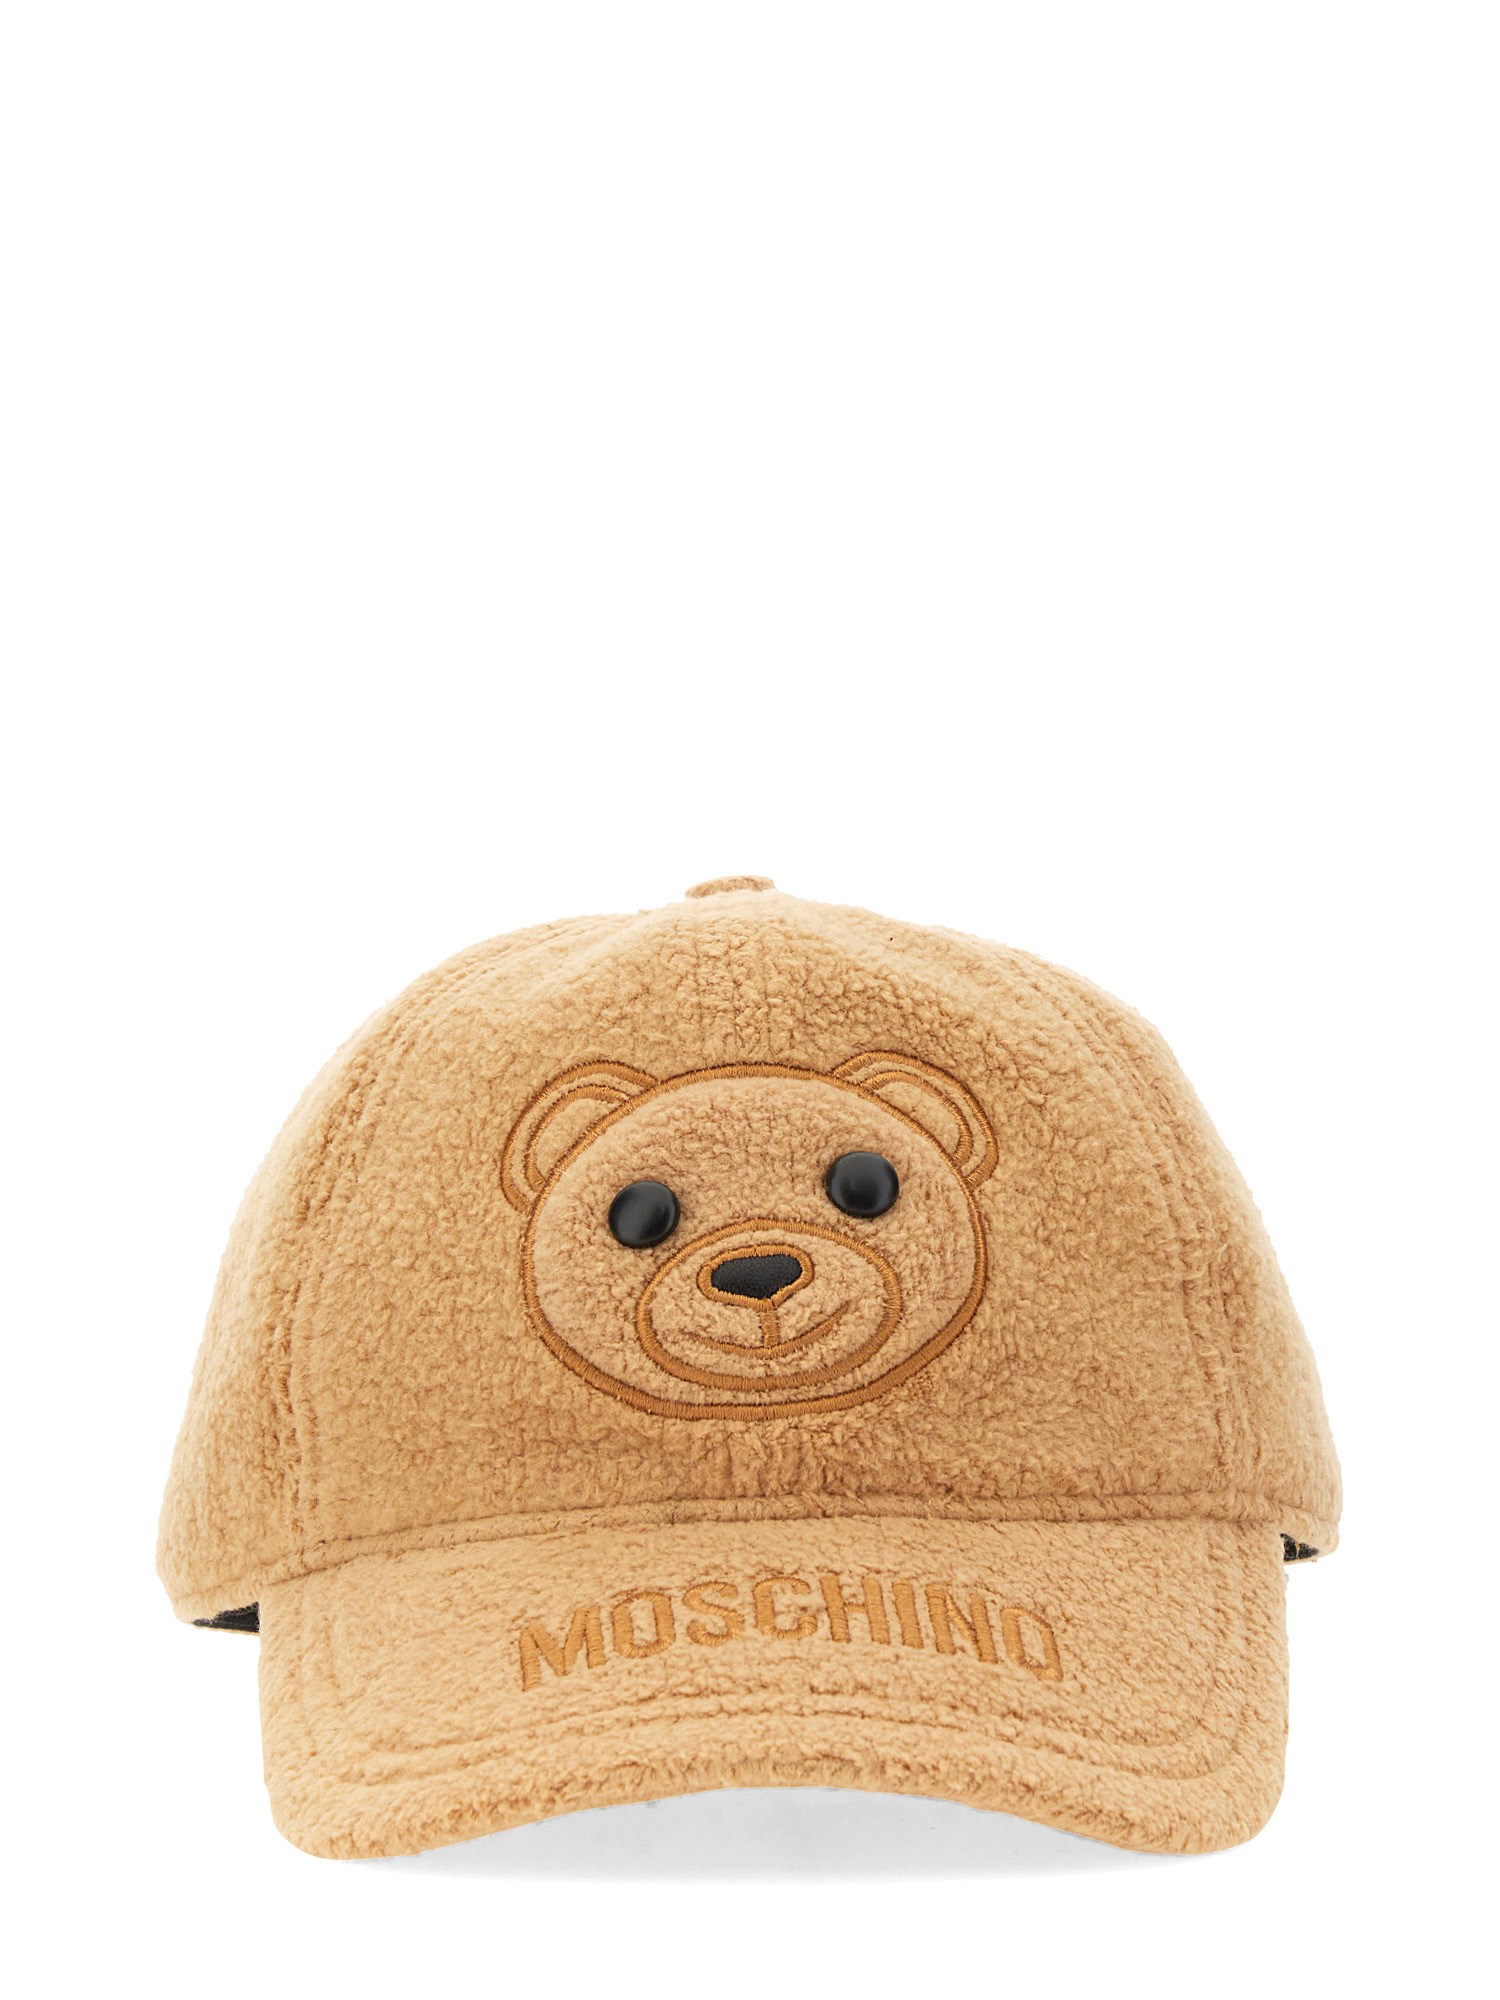 moschino baseball hat with teddy